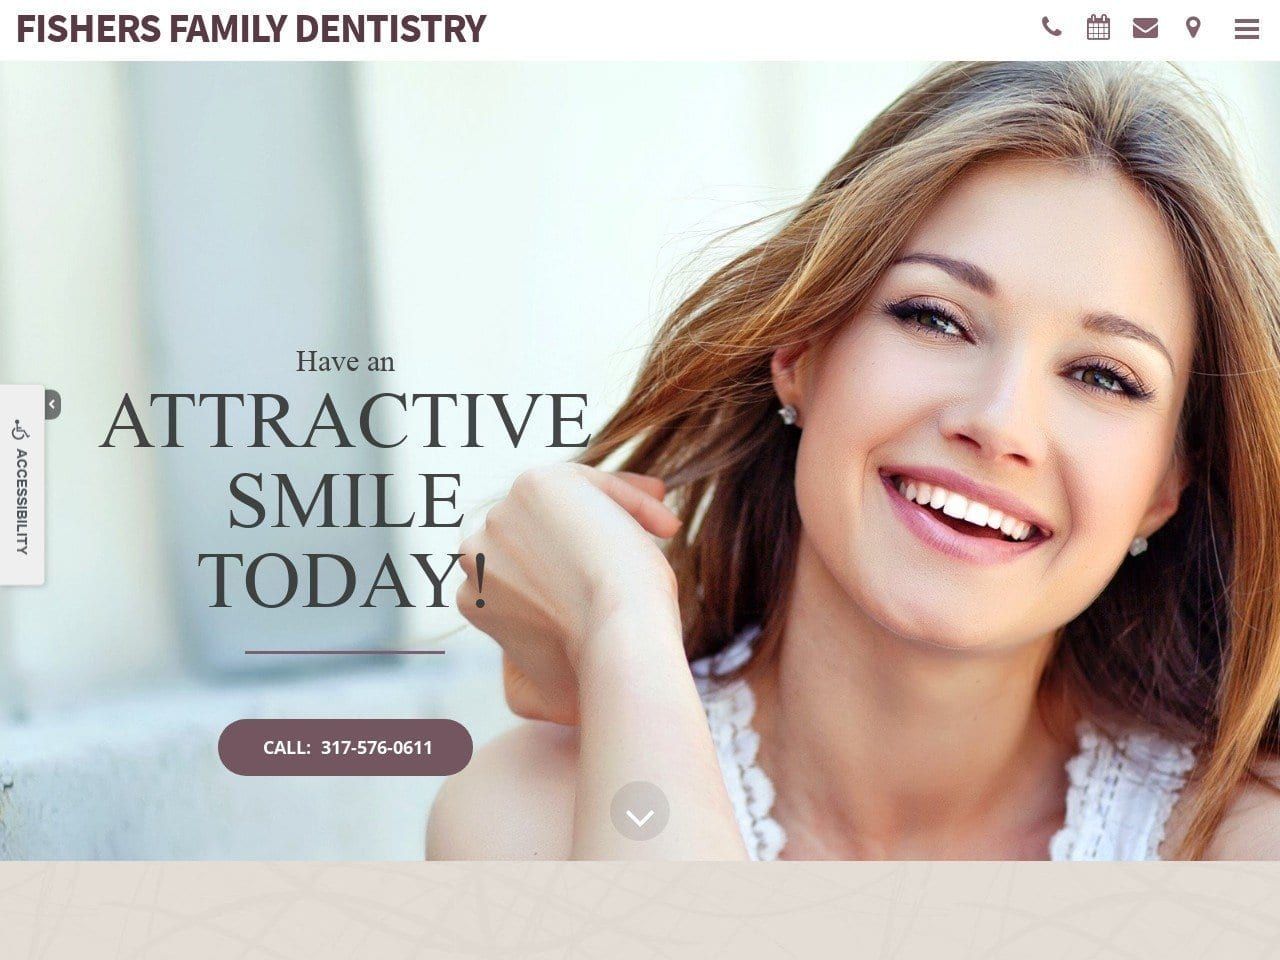 The Fishers Dentist Website Screenshot from fishersfamilydentistry.com